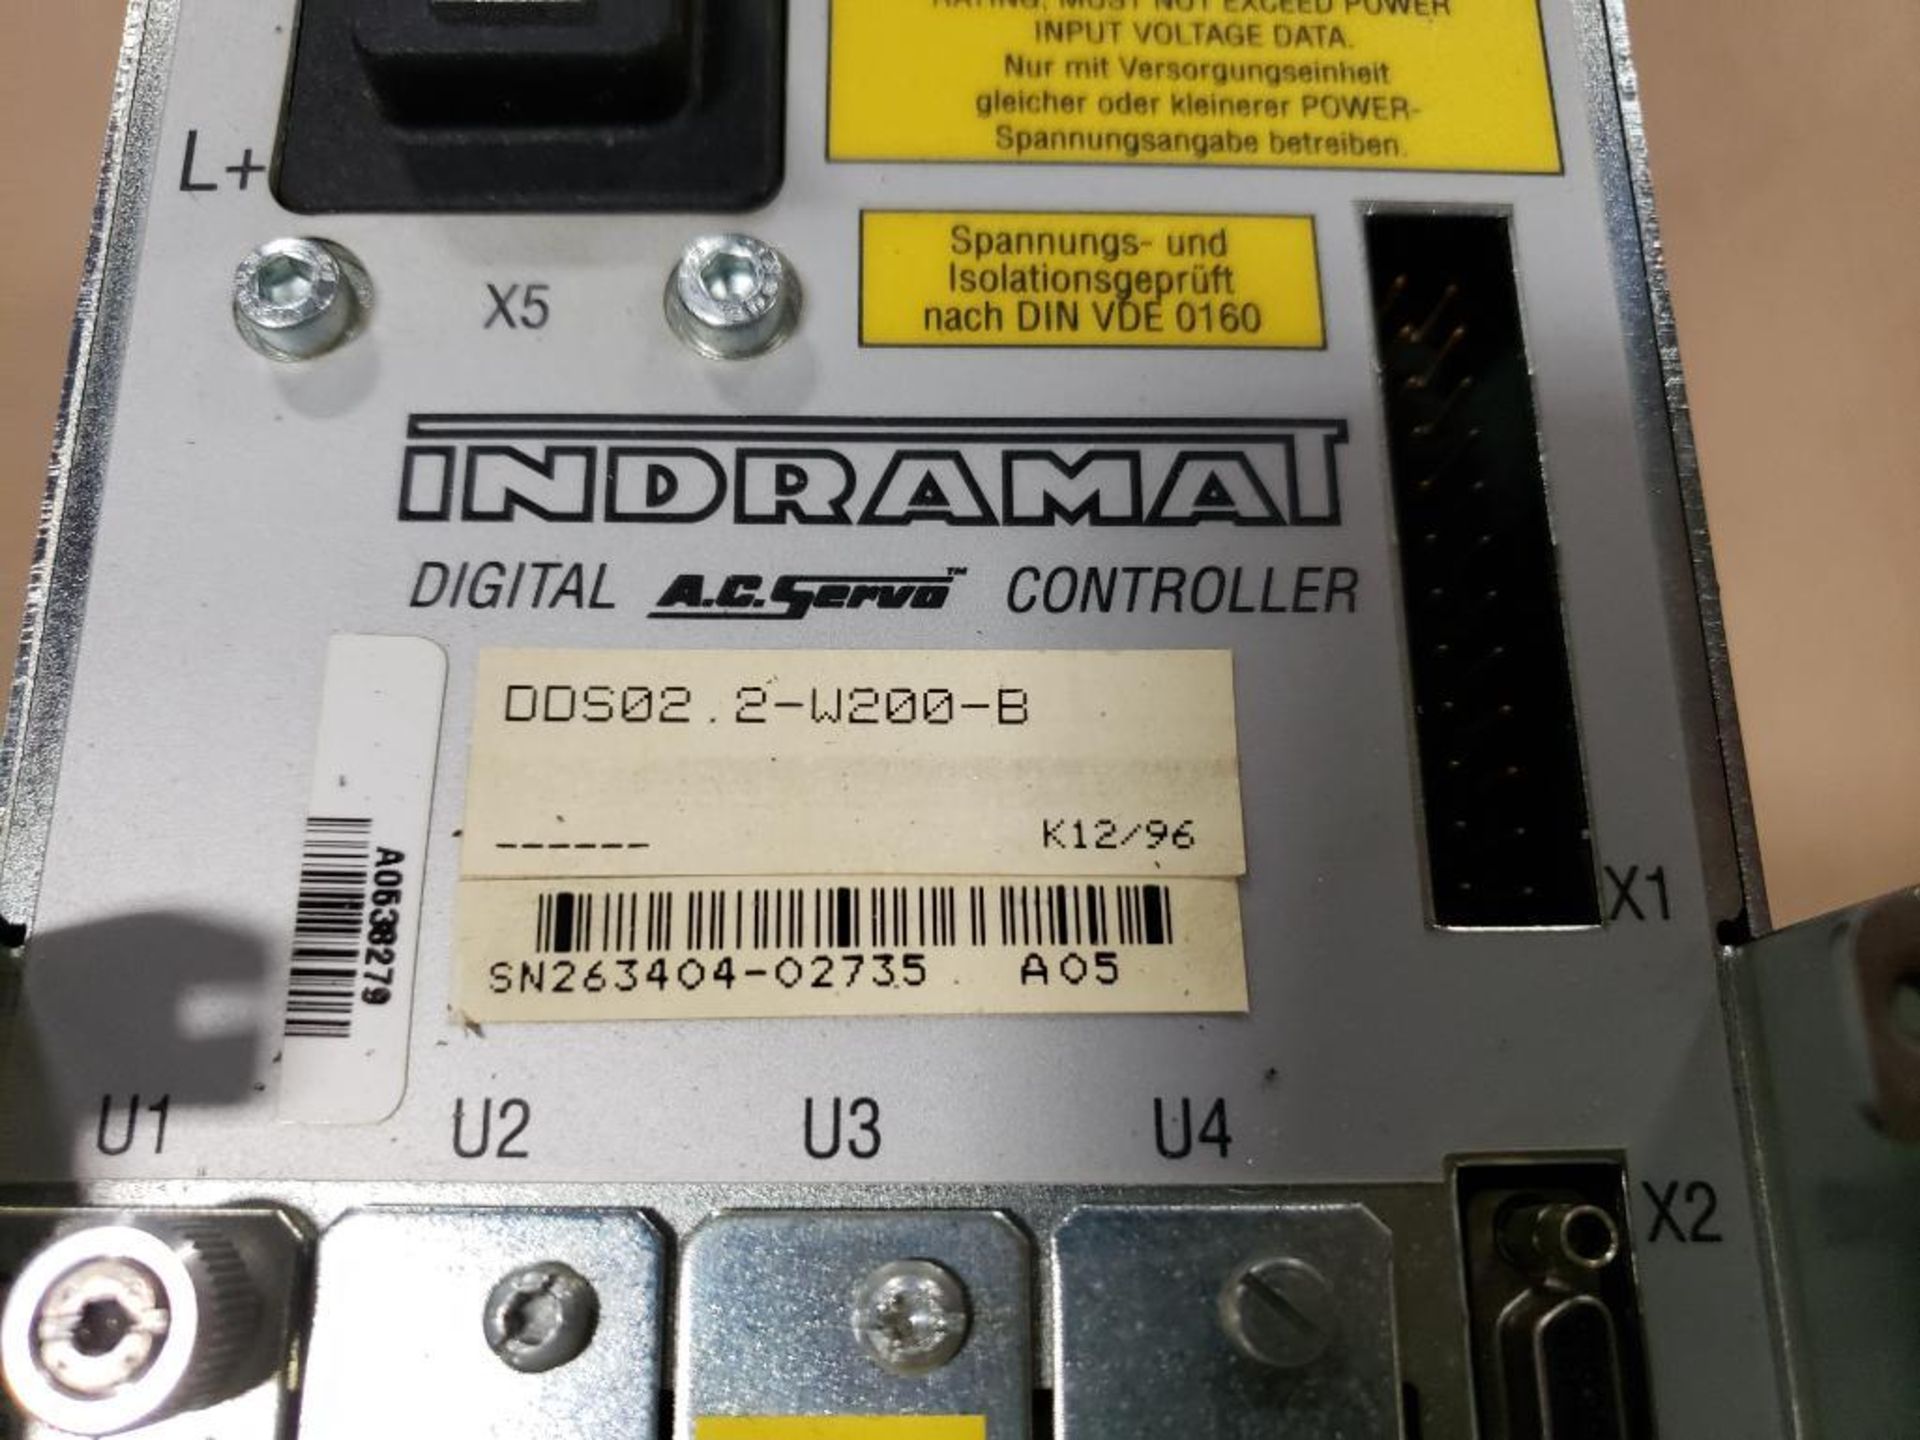 Indramat DDS02.2-W200-B digital AC servo controller. W/ FWC-DSM2.3-SSE-02V49-MS firmware module. - Image 3 of 4